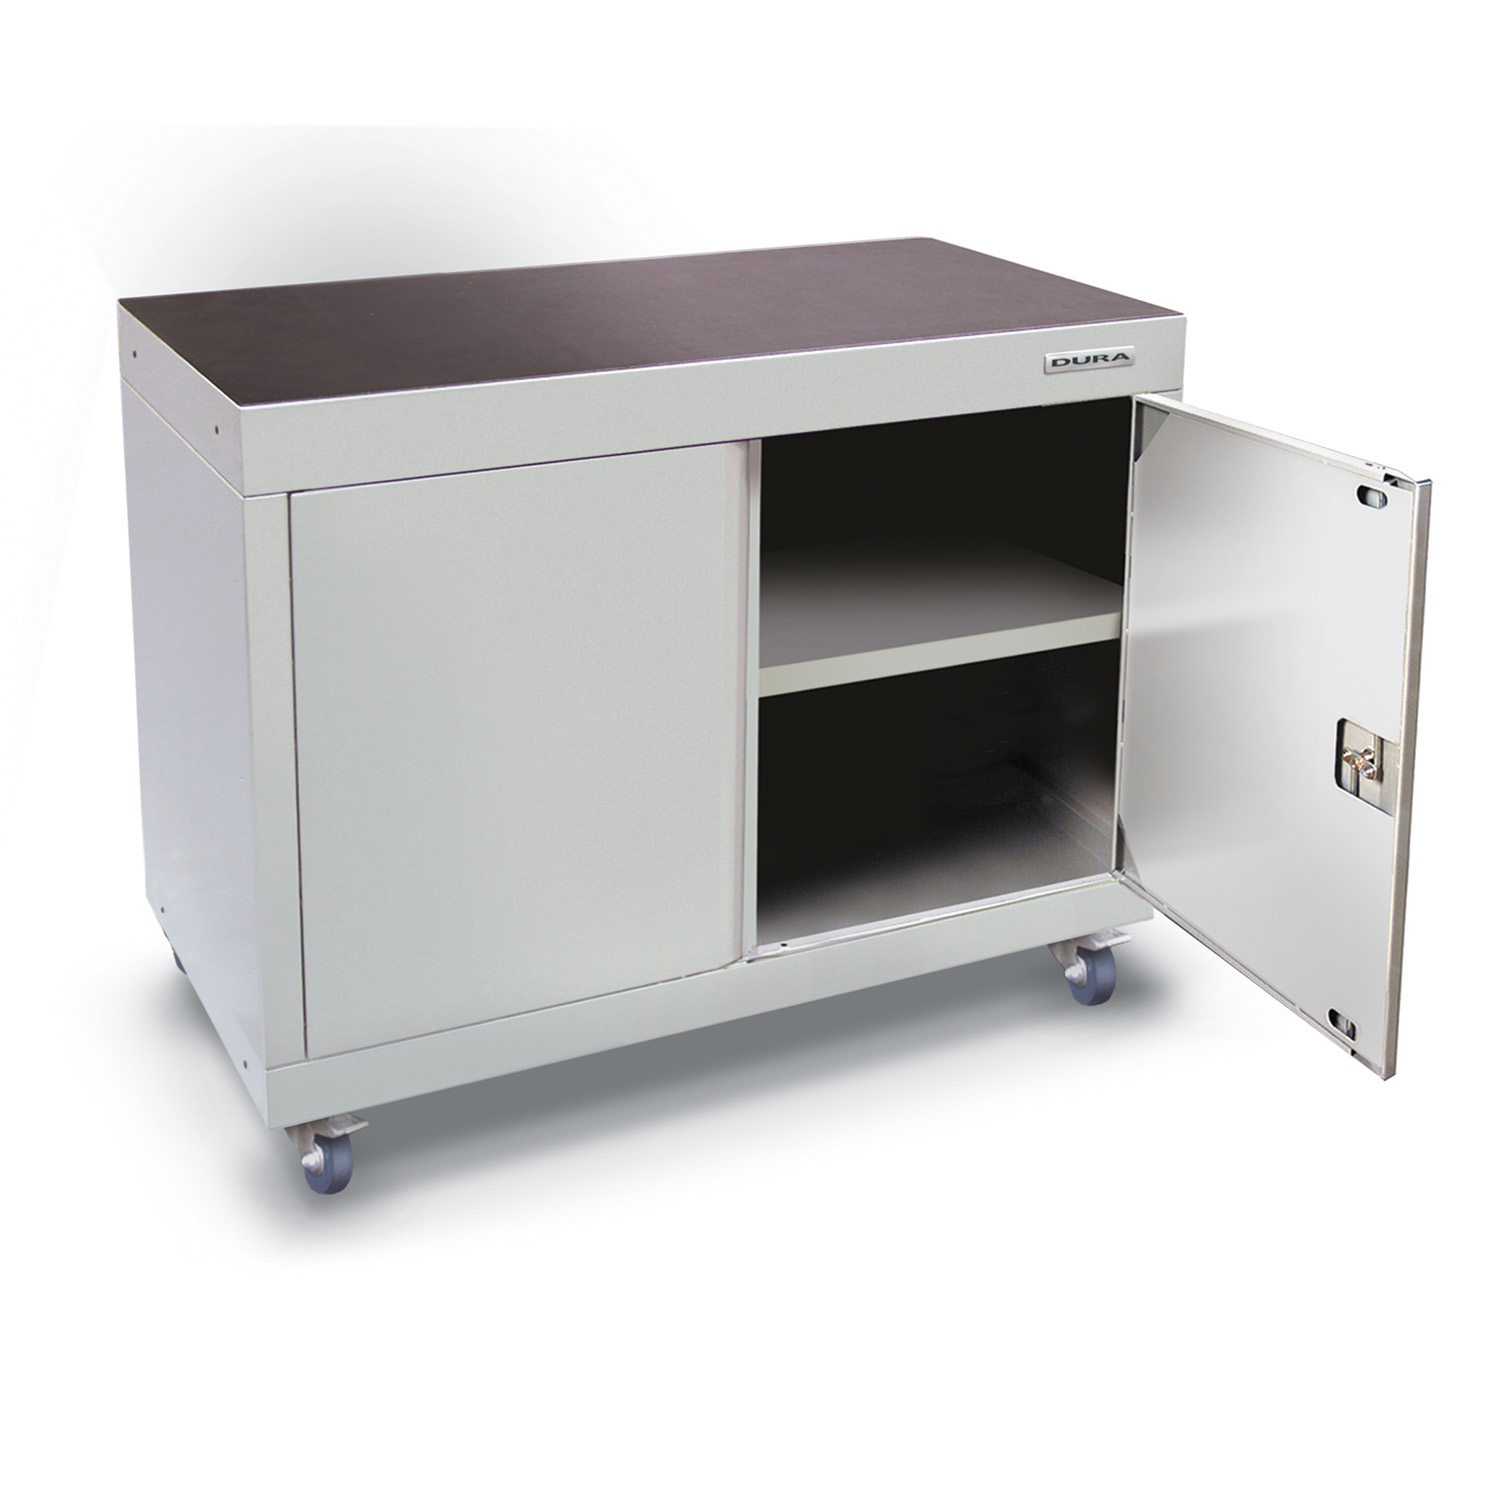 1200mm wide base cabinet (double hinged doors/castors)